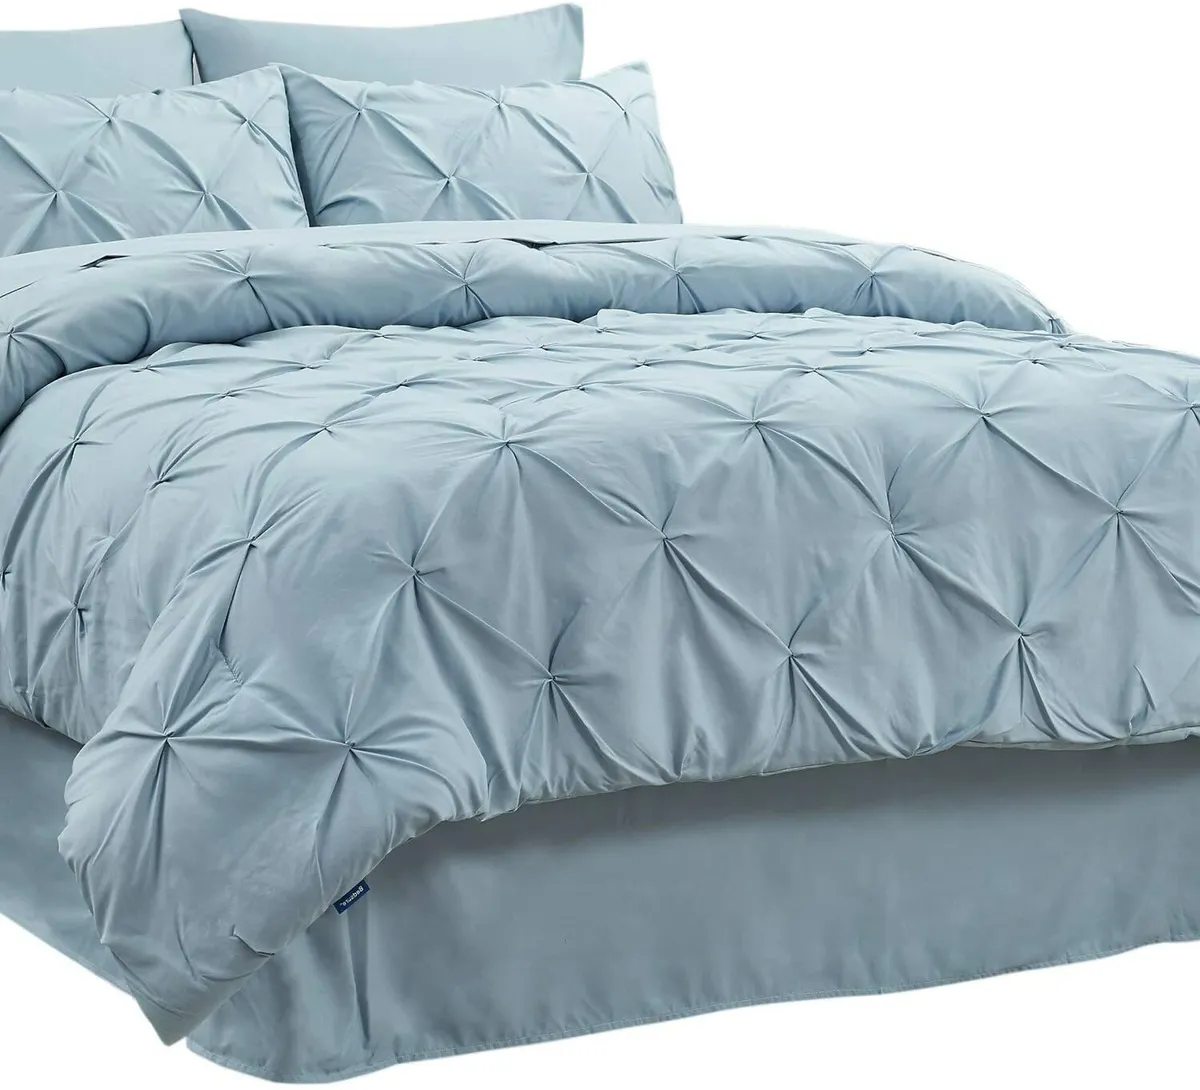 bedsure comforter set full/queen bed in a bag light-blue 8 pieces